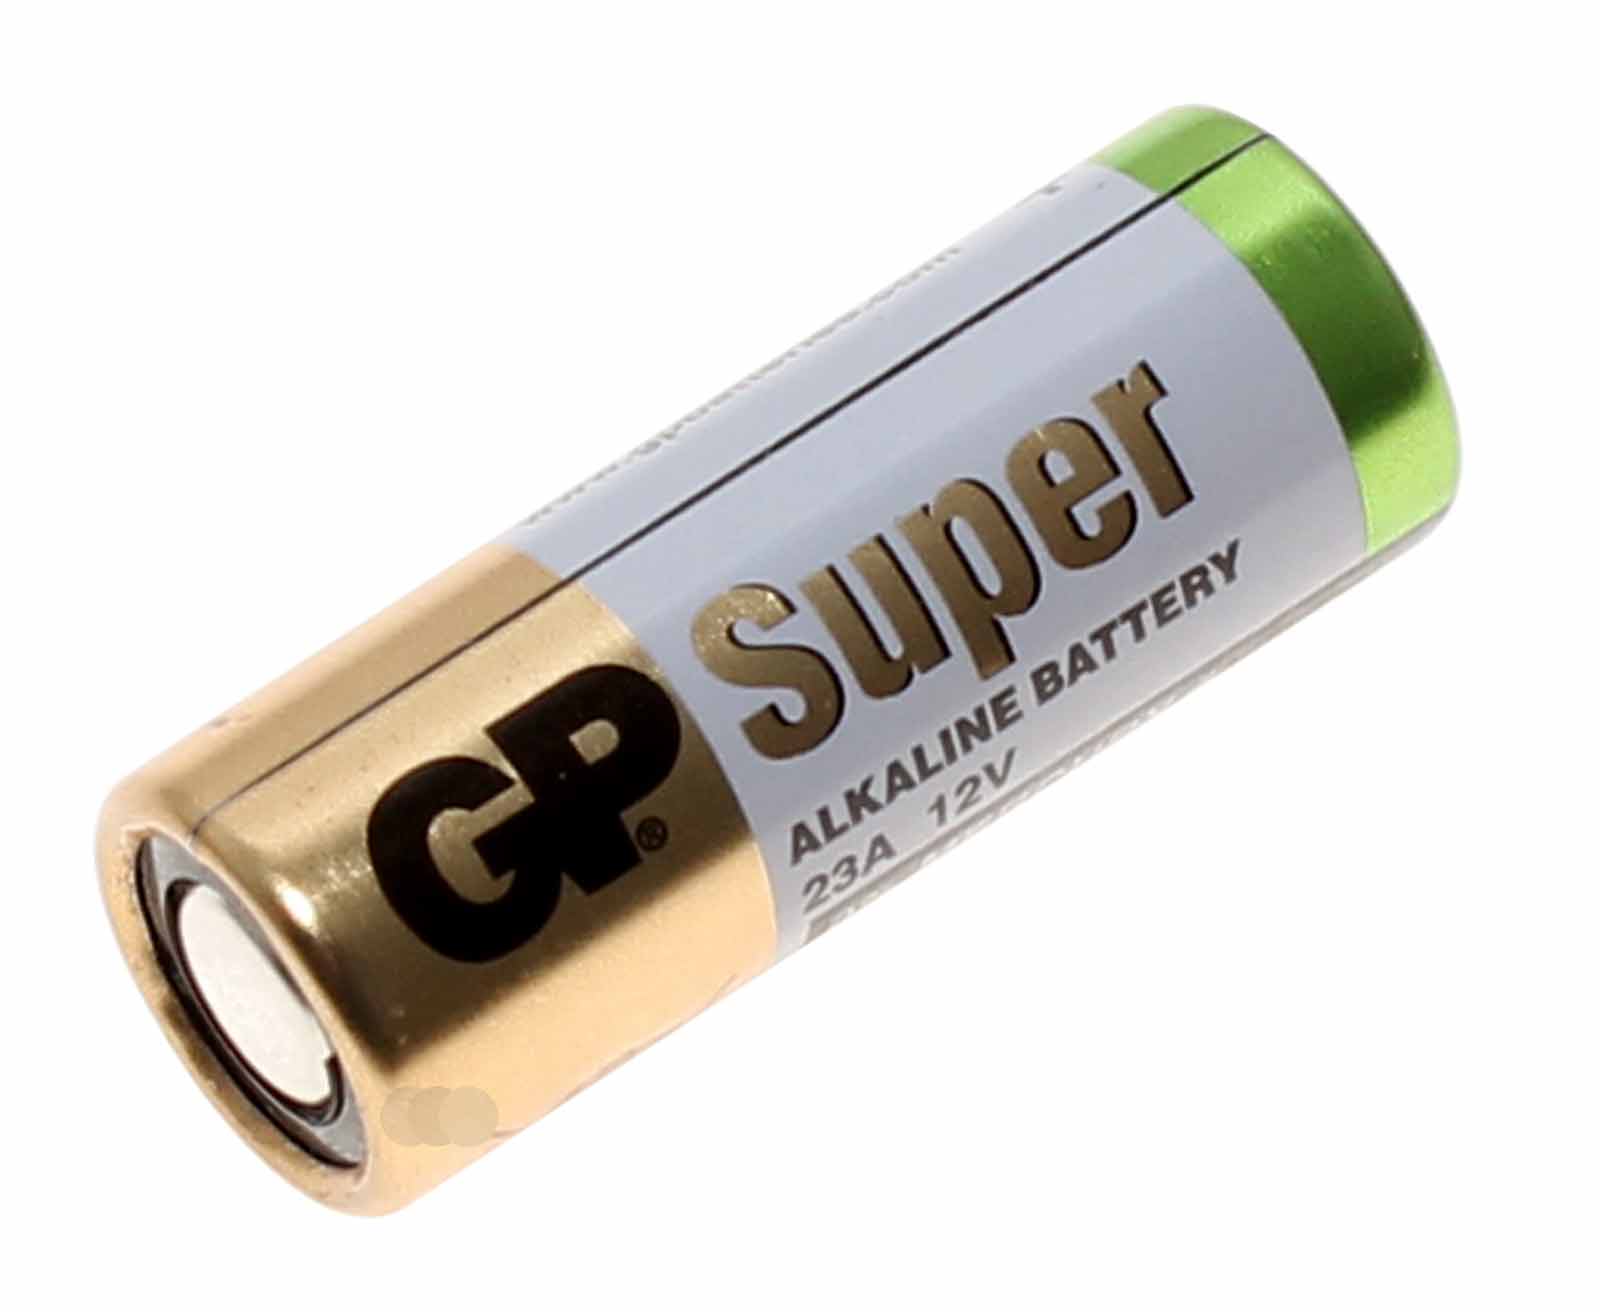 GP 23A Alkali Batterie | A23 V23PX V23GA L1028 LRV08 MN21 G23A E23A V23A |  12V 3